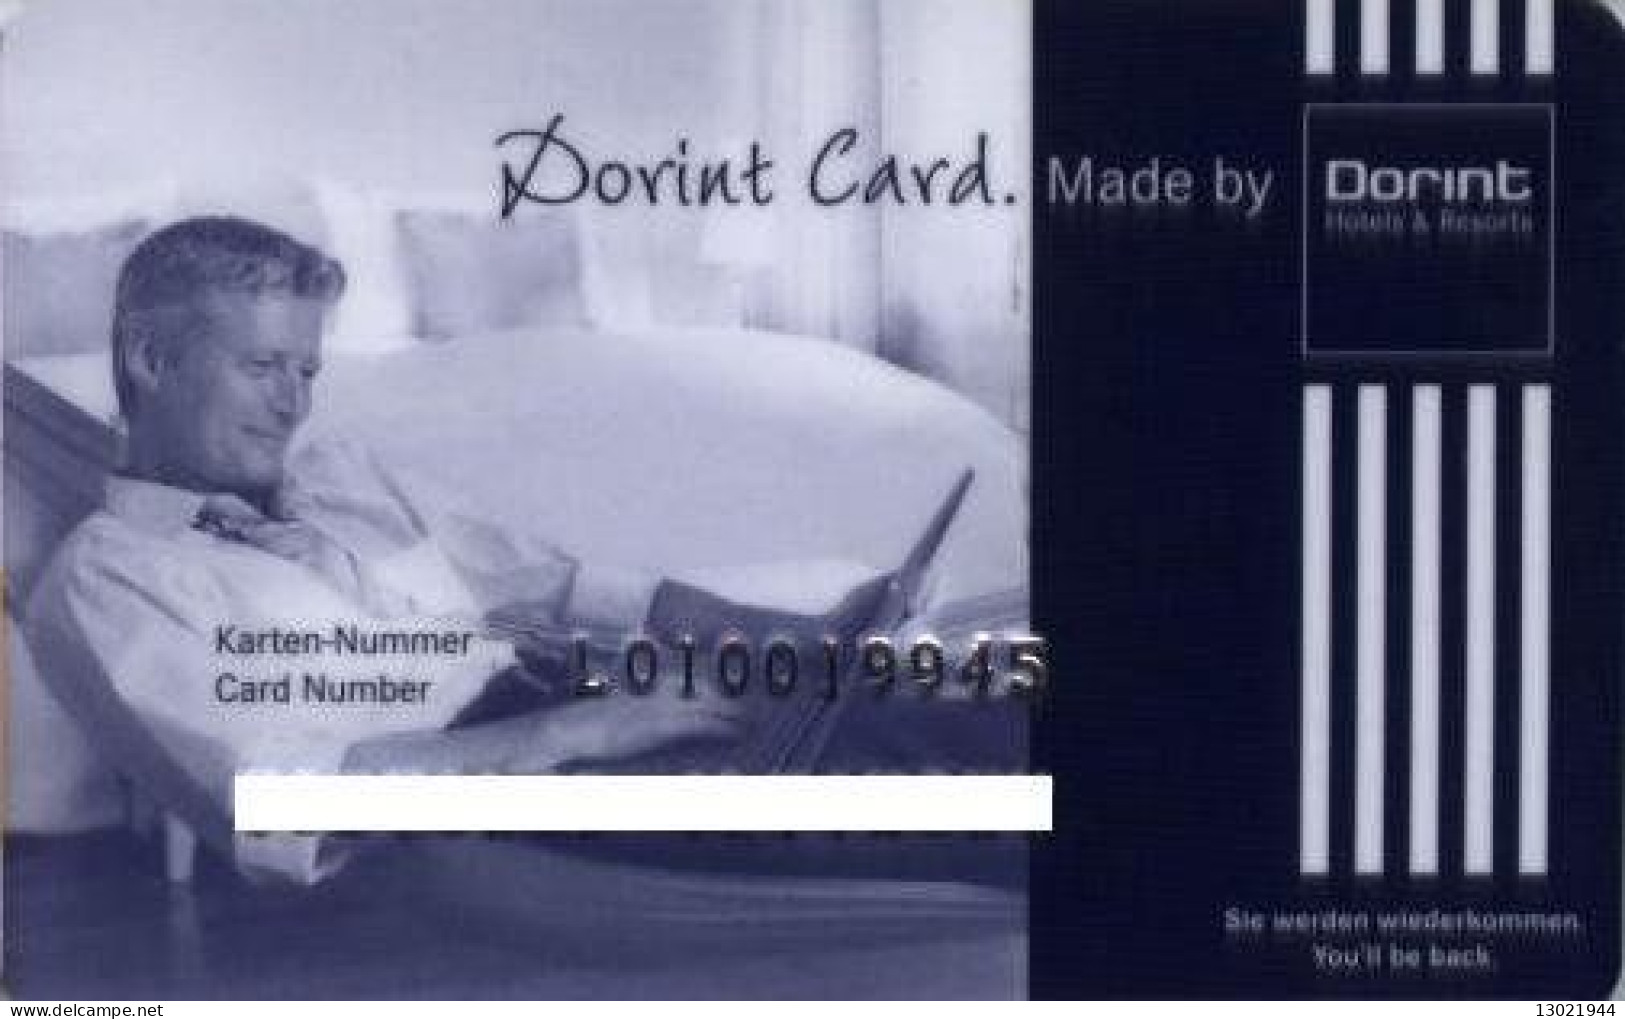 GERMANIA  KEY HOTEL   Dorint Card - Loyalty Card - Chiavi Elettroniche Di Alberghi